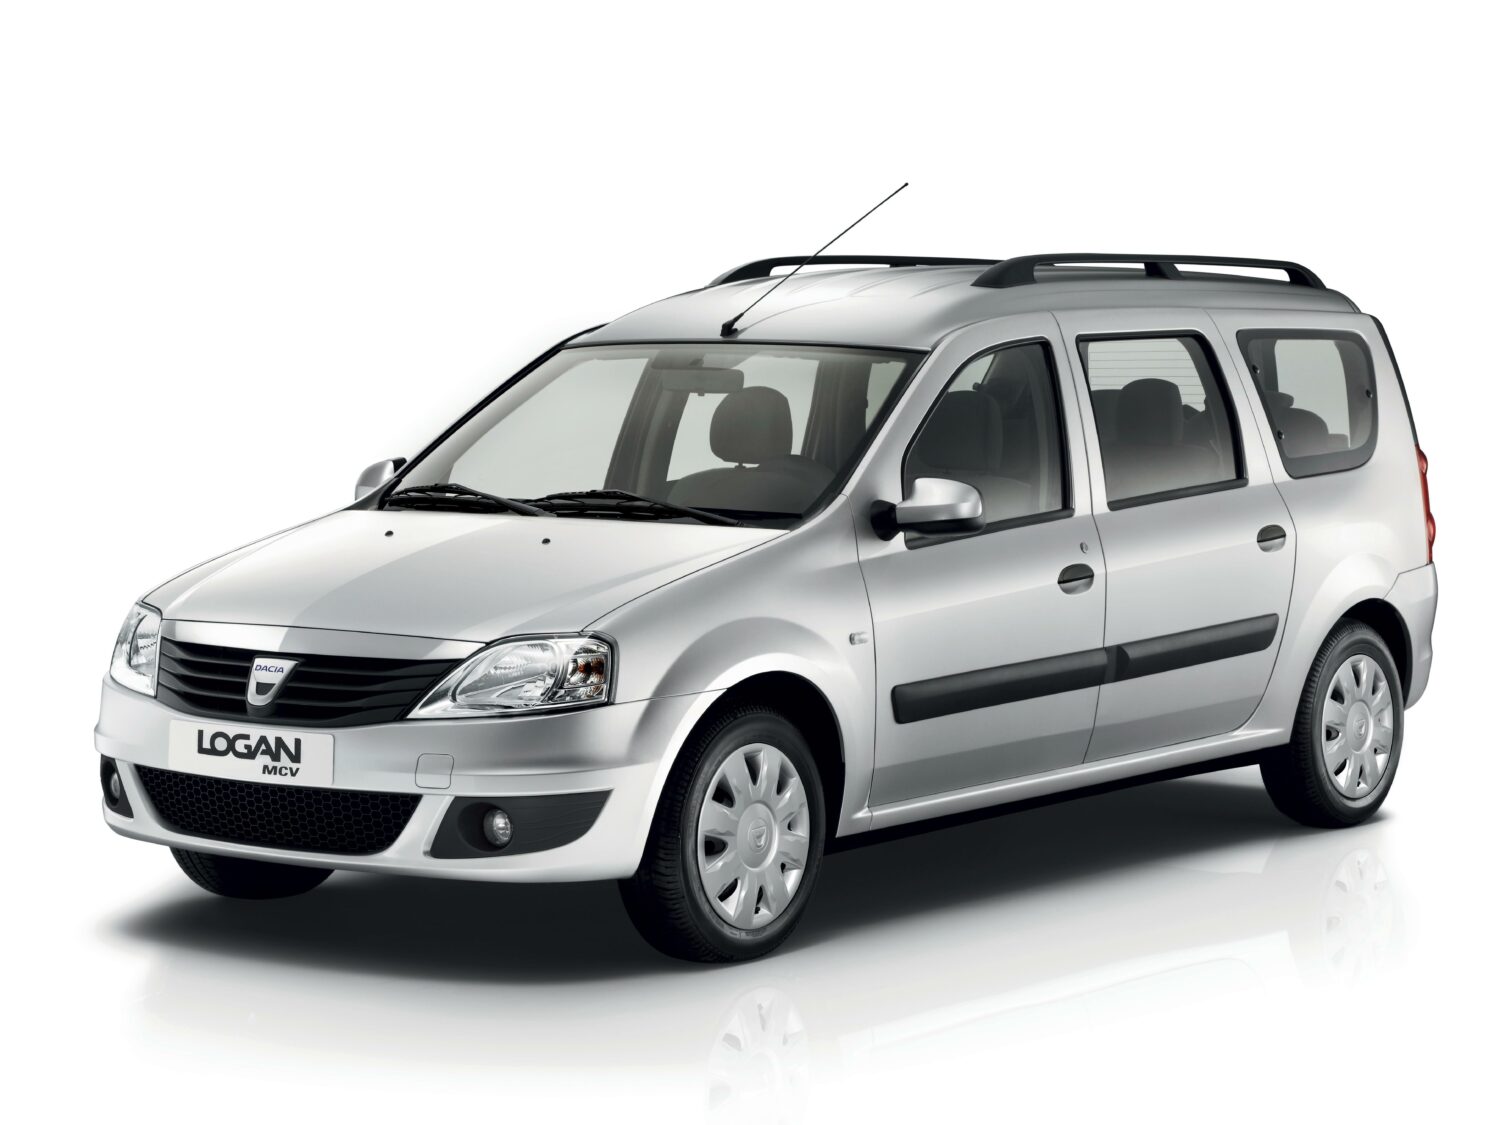 2011 - Dacia LOGAN MCV.jpg